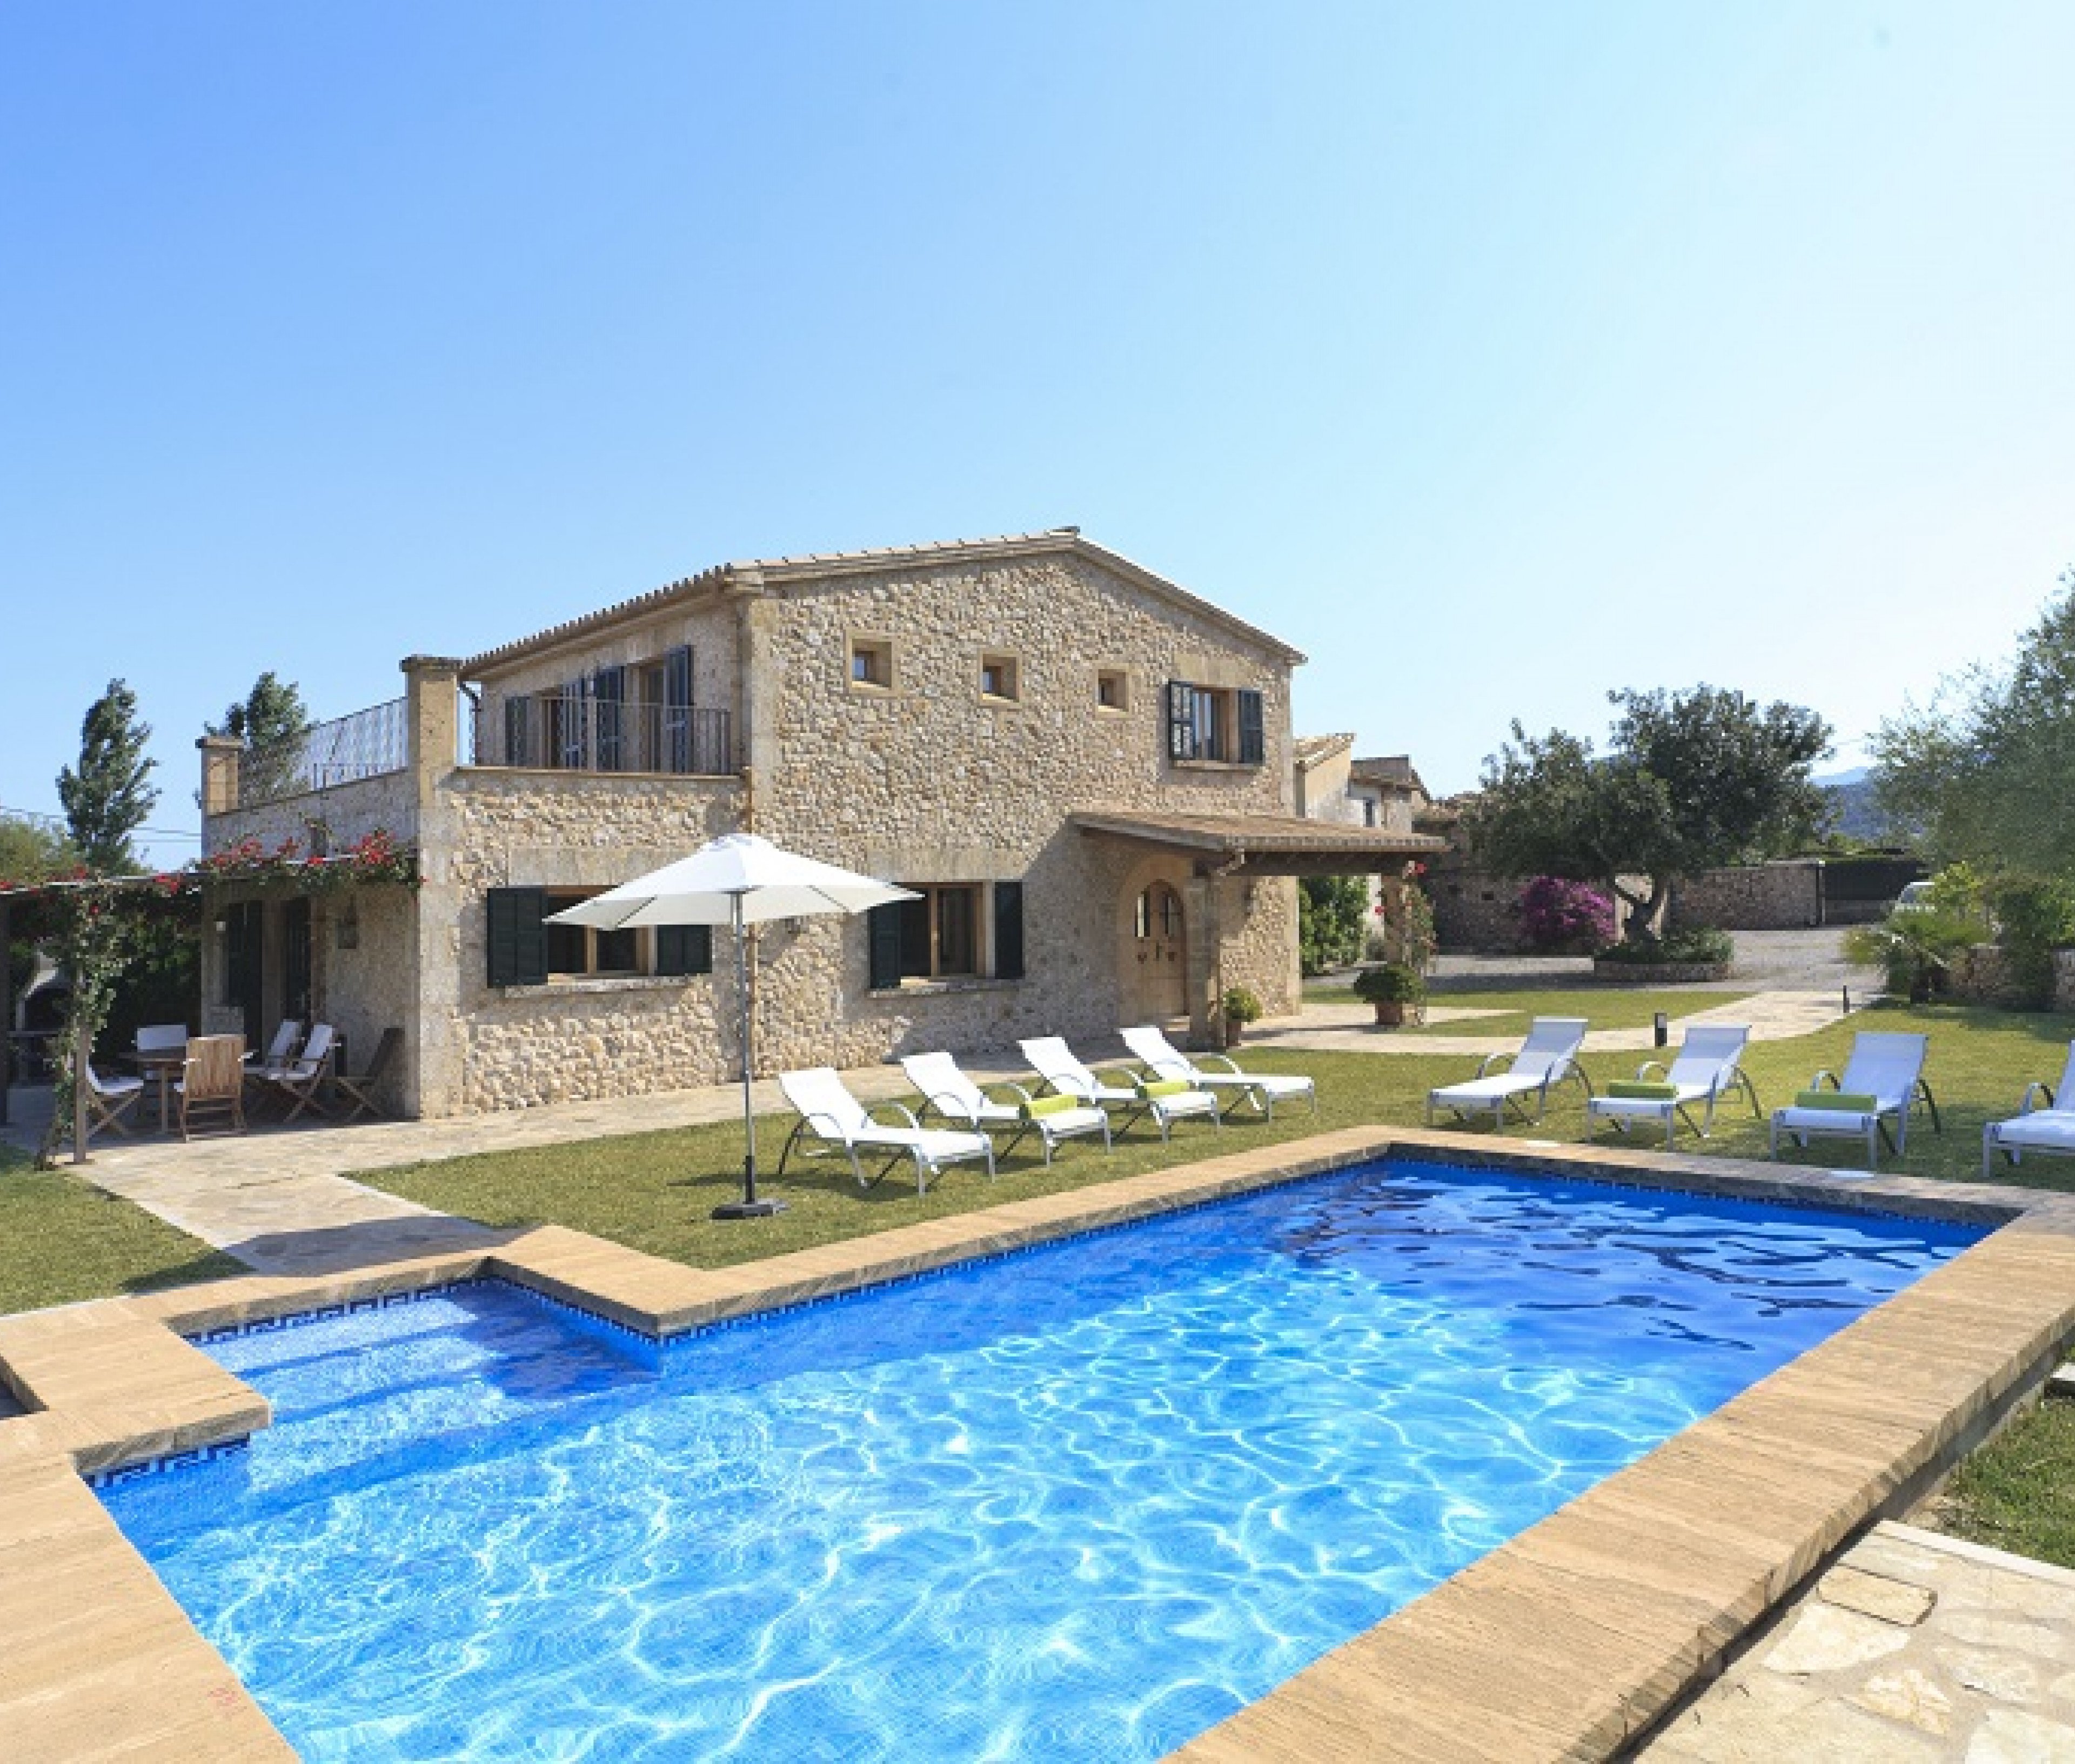 Font Xica Petit - Majorca holiday villas with pools